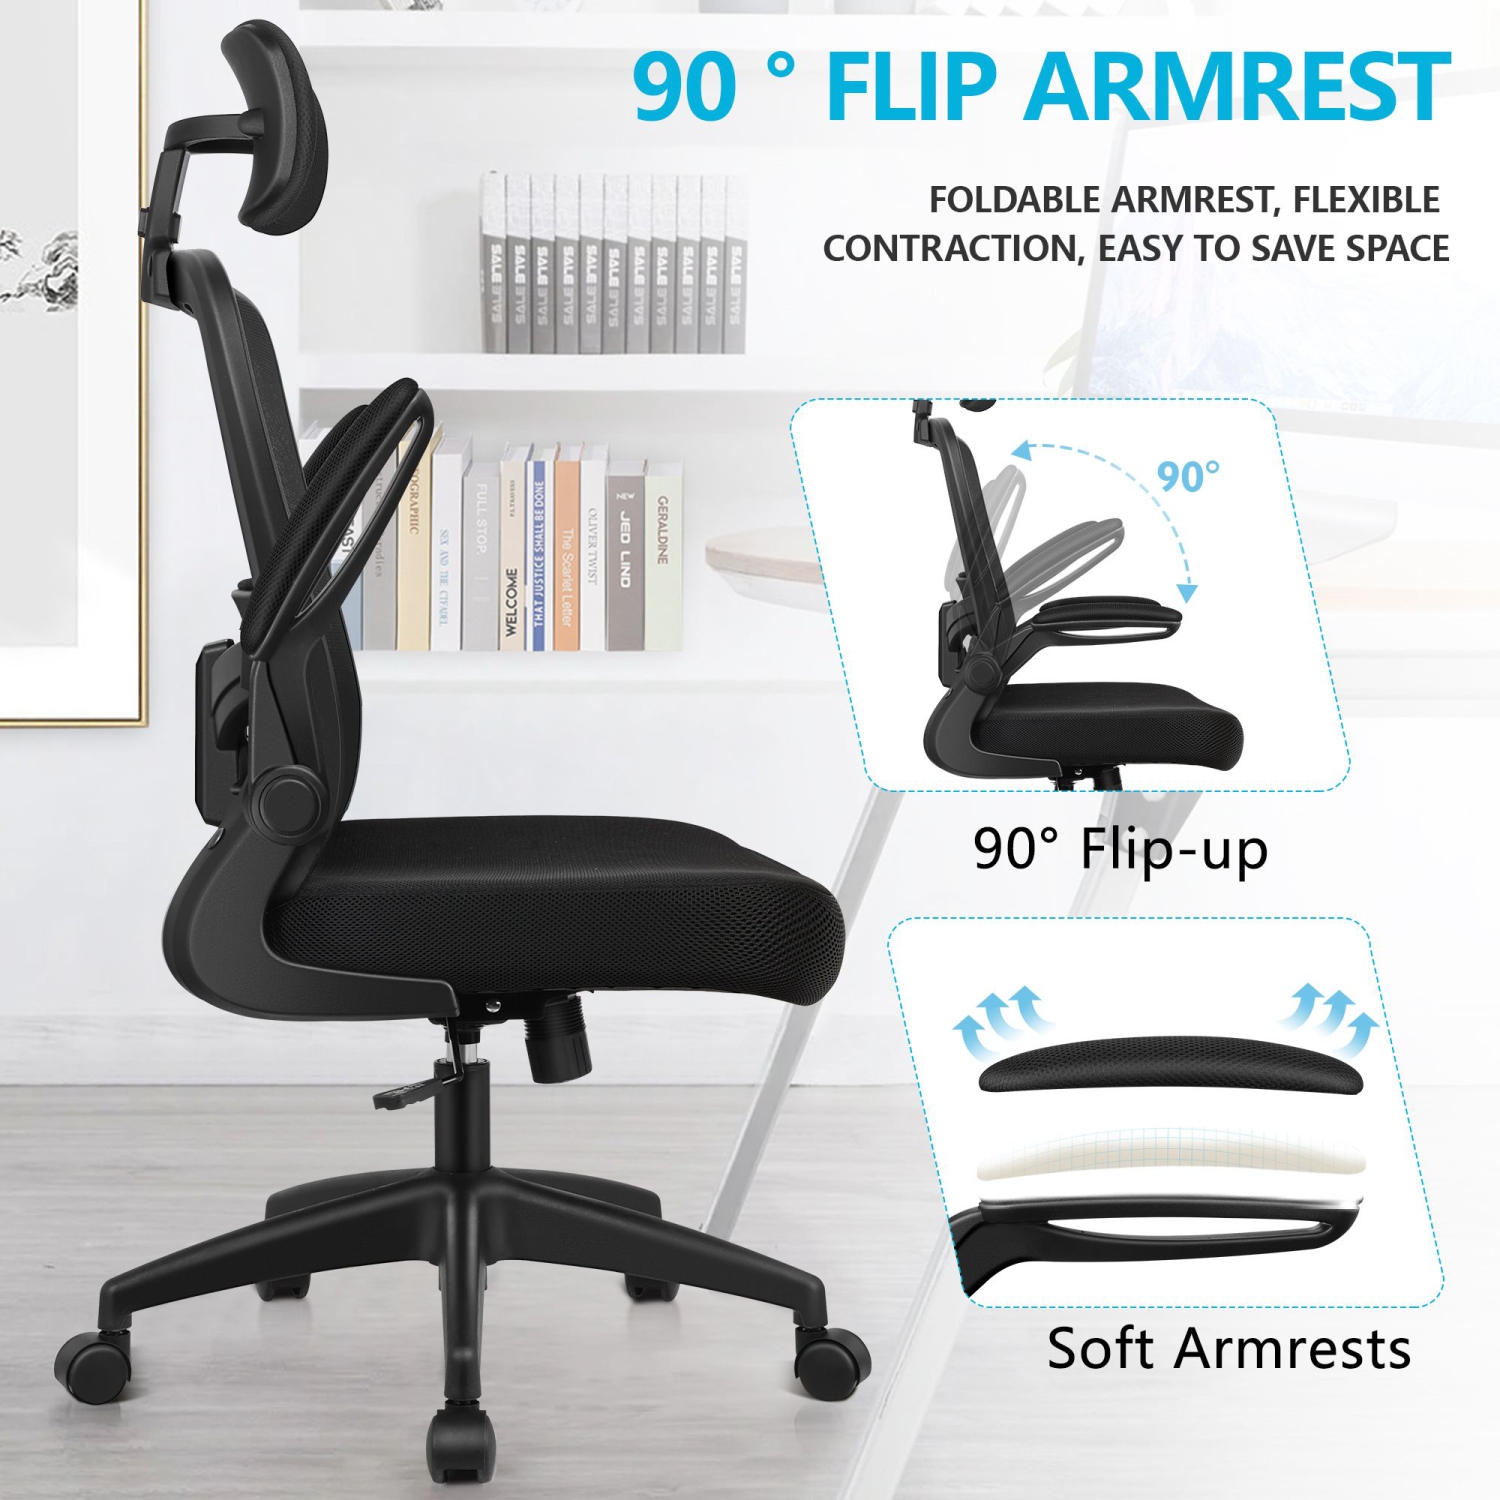 CoolHut Ergonomic Office Chair, Headrest Desk Chair with